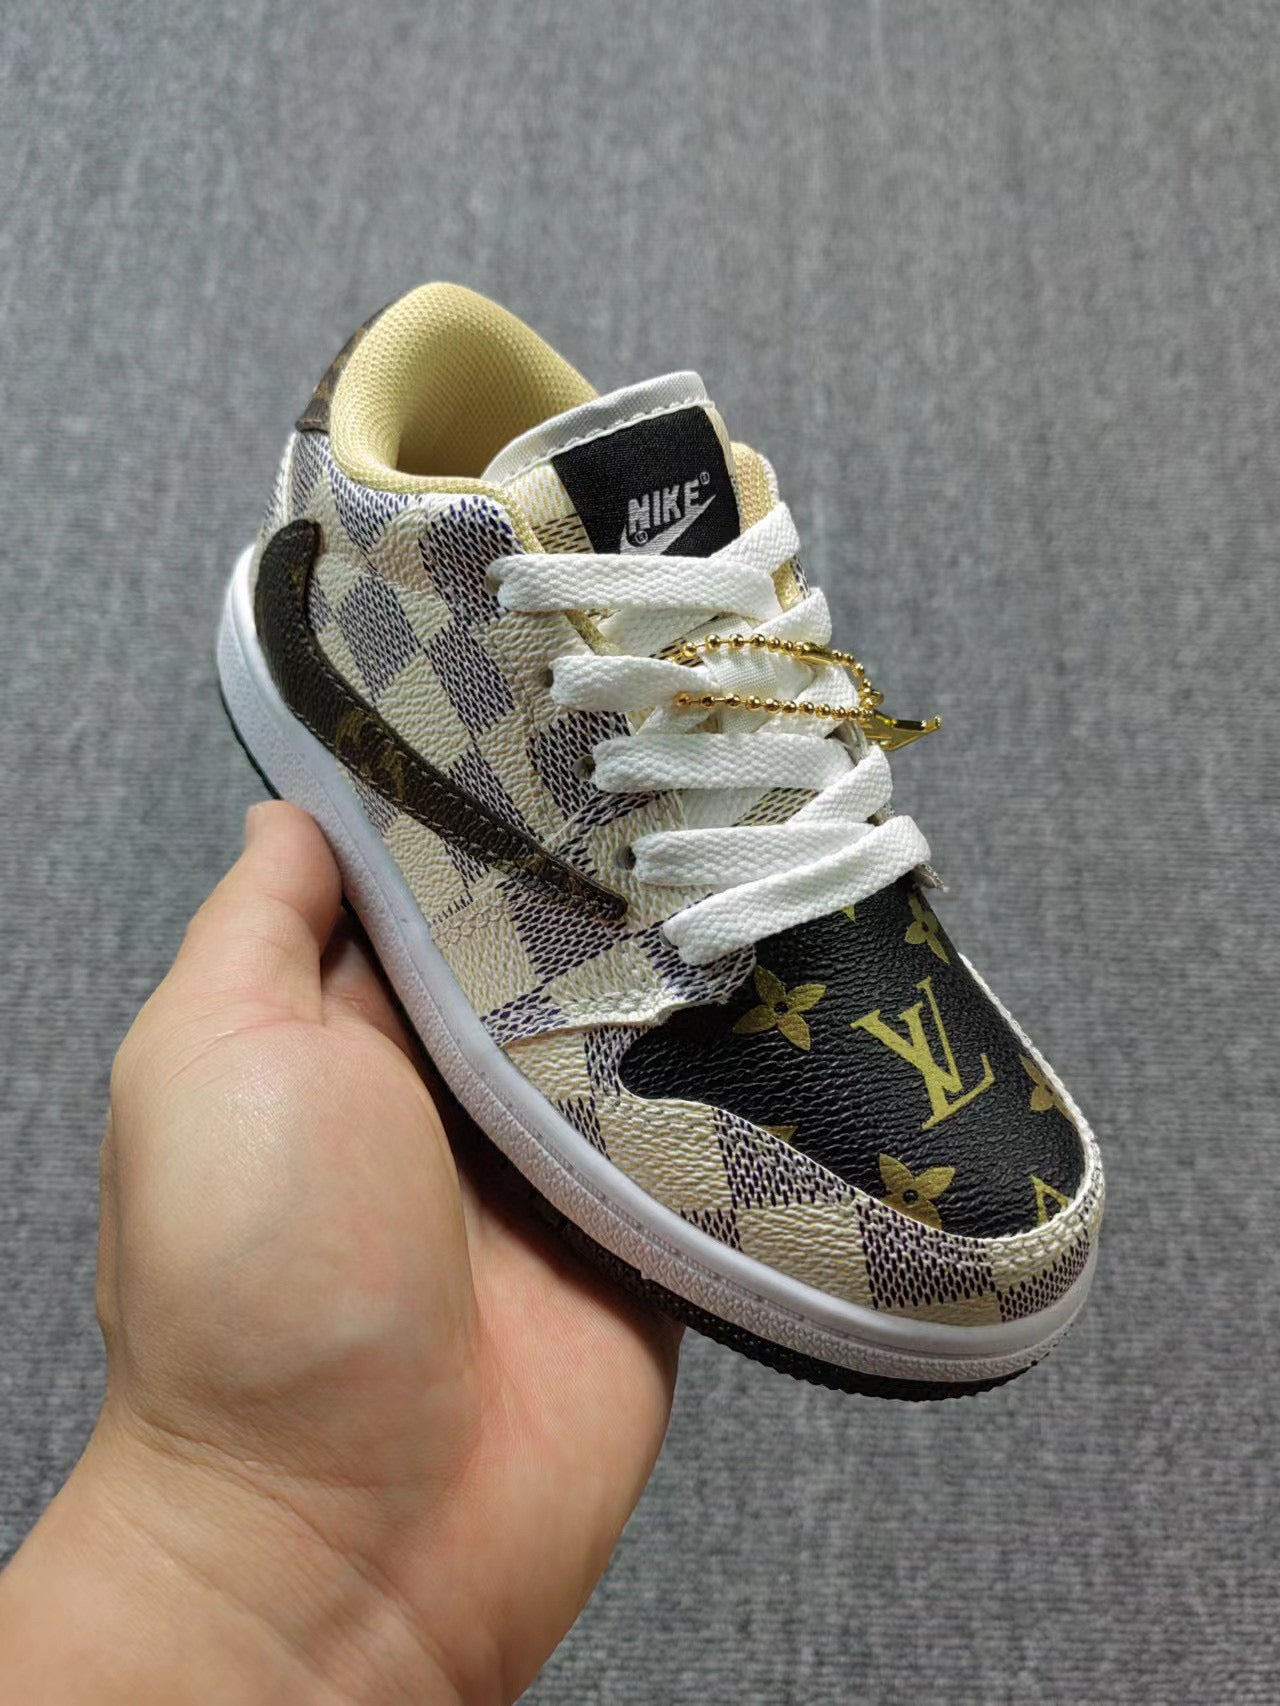 Baby Nike Jordan Lous Vuitton